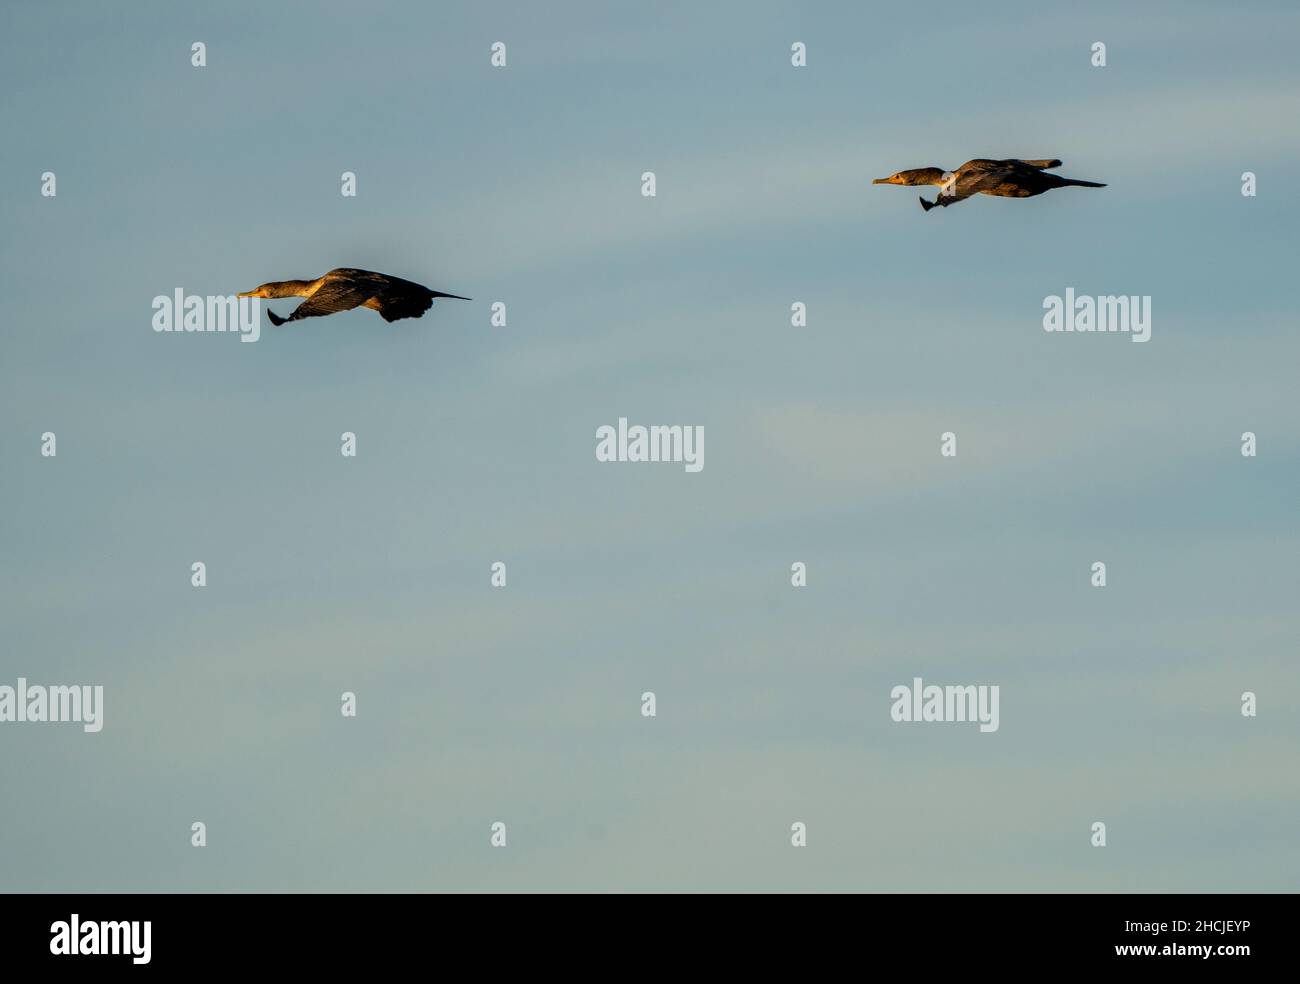 Cormorants at lake in Saskatchewan Canada prairie wildlife Stock Photo